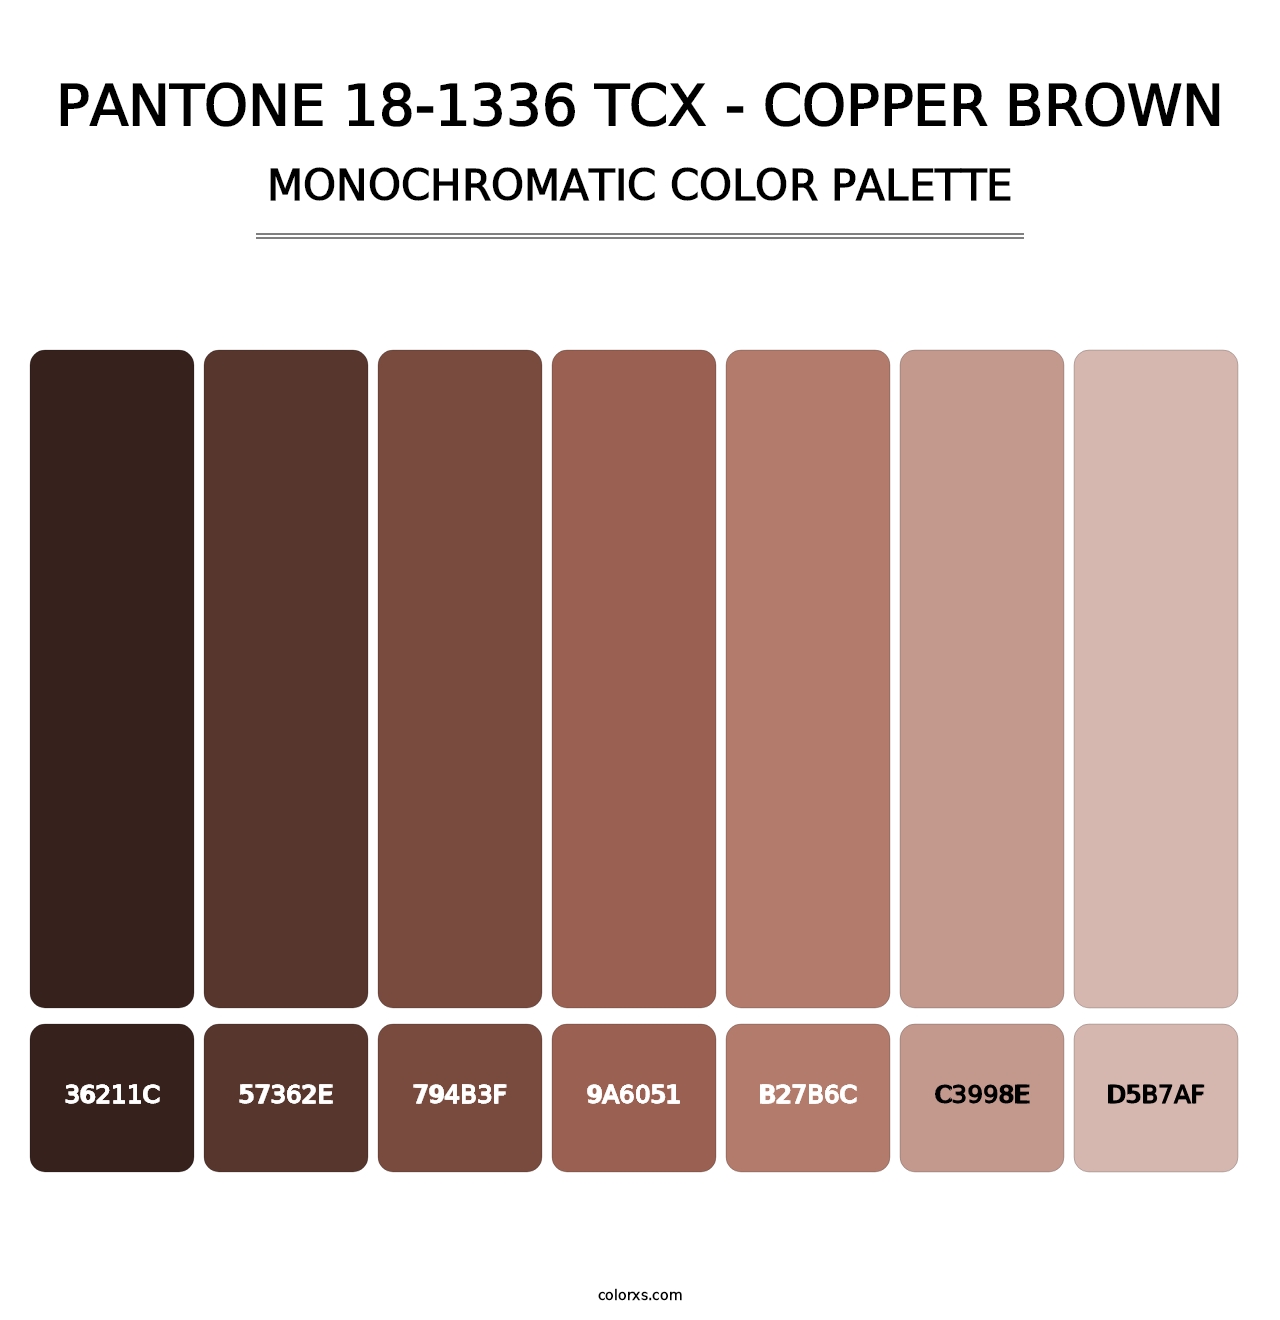 PANTONE 18-1336 TCX - Copper Brown - Monochromatic Color Palette